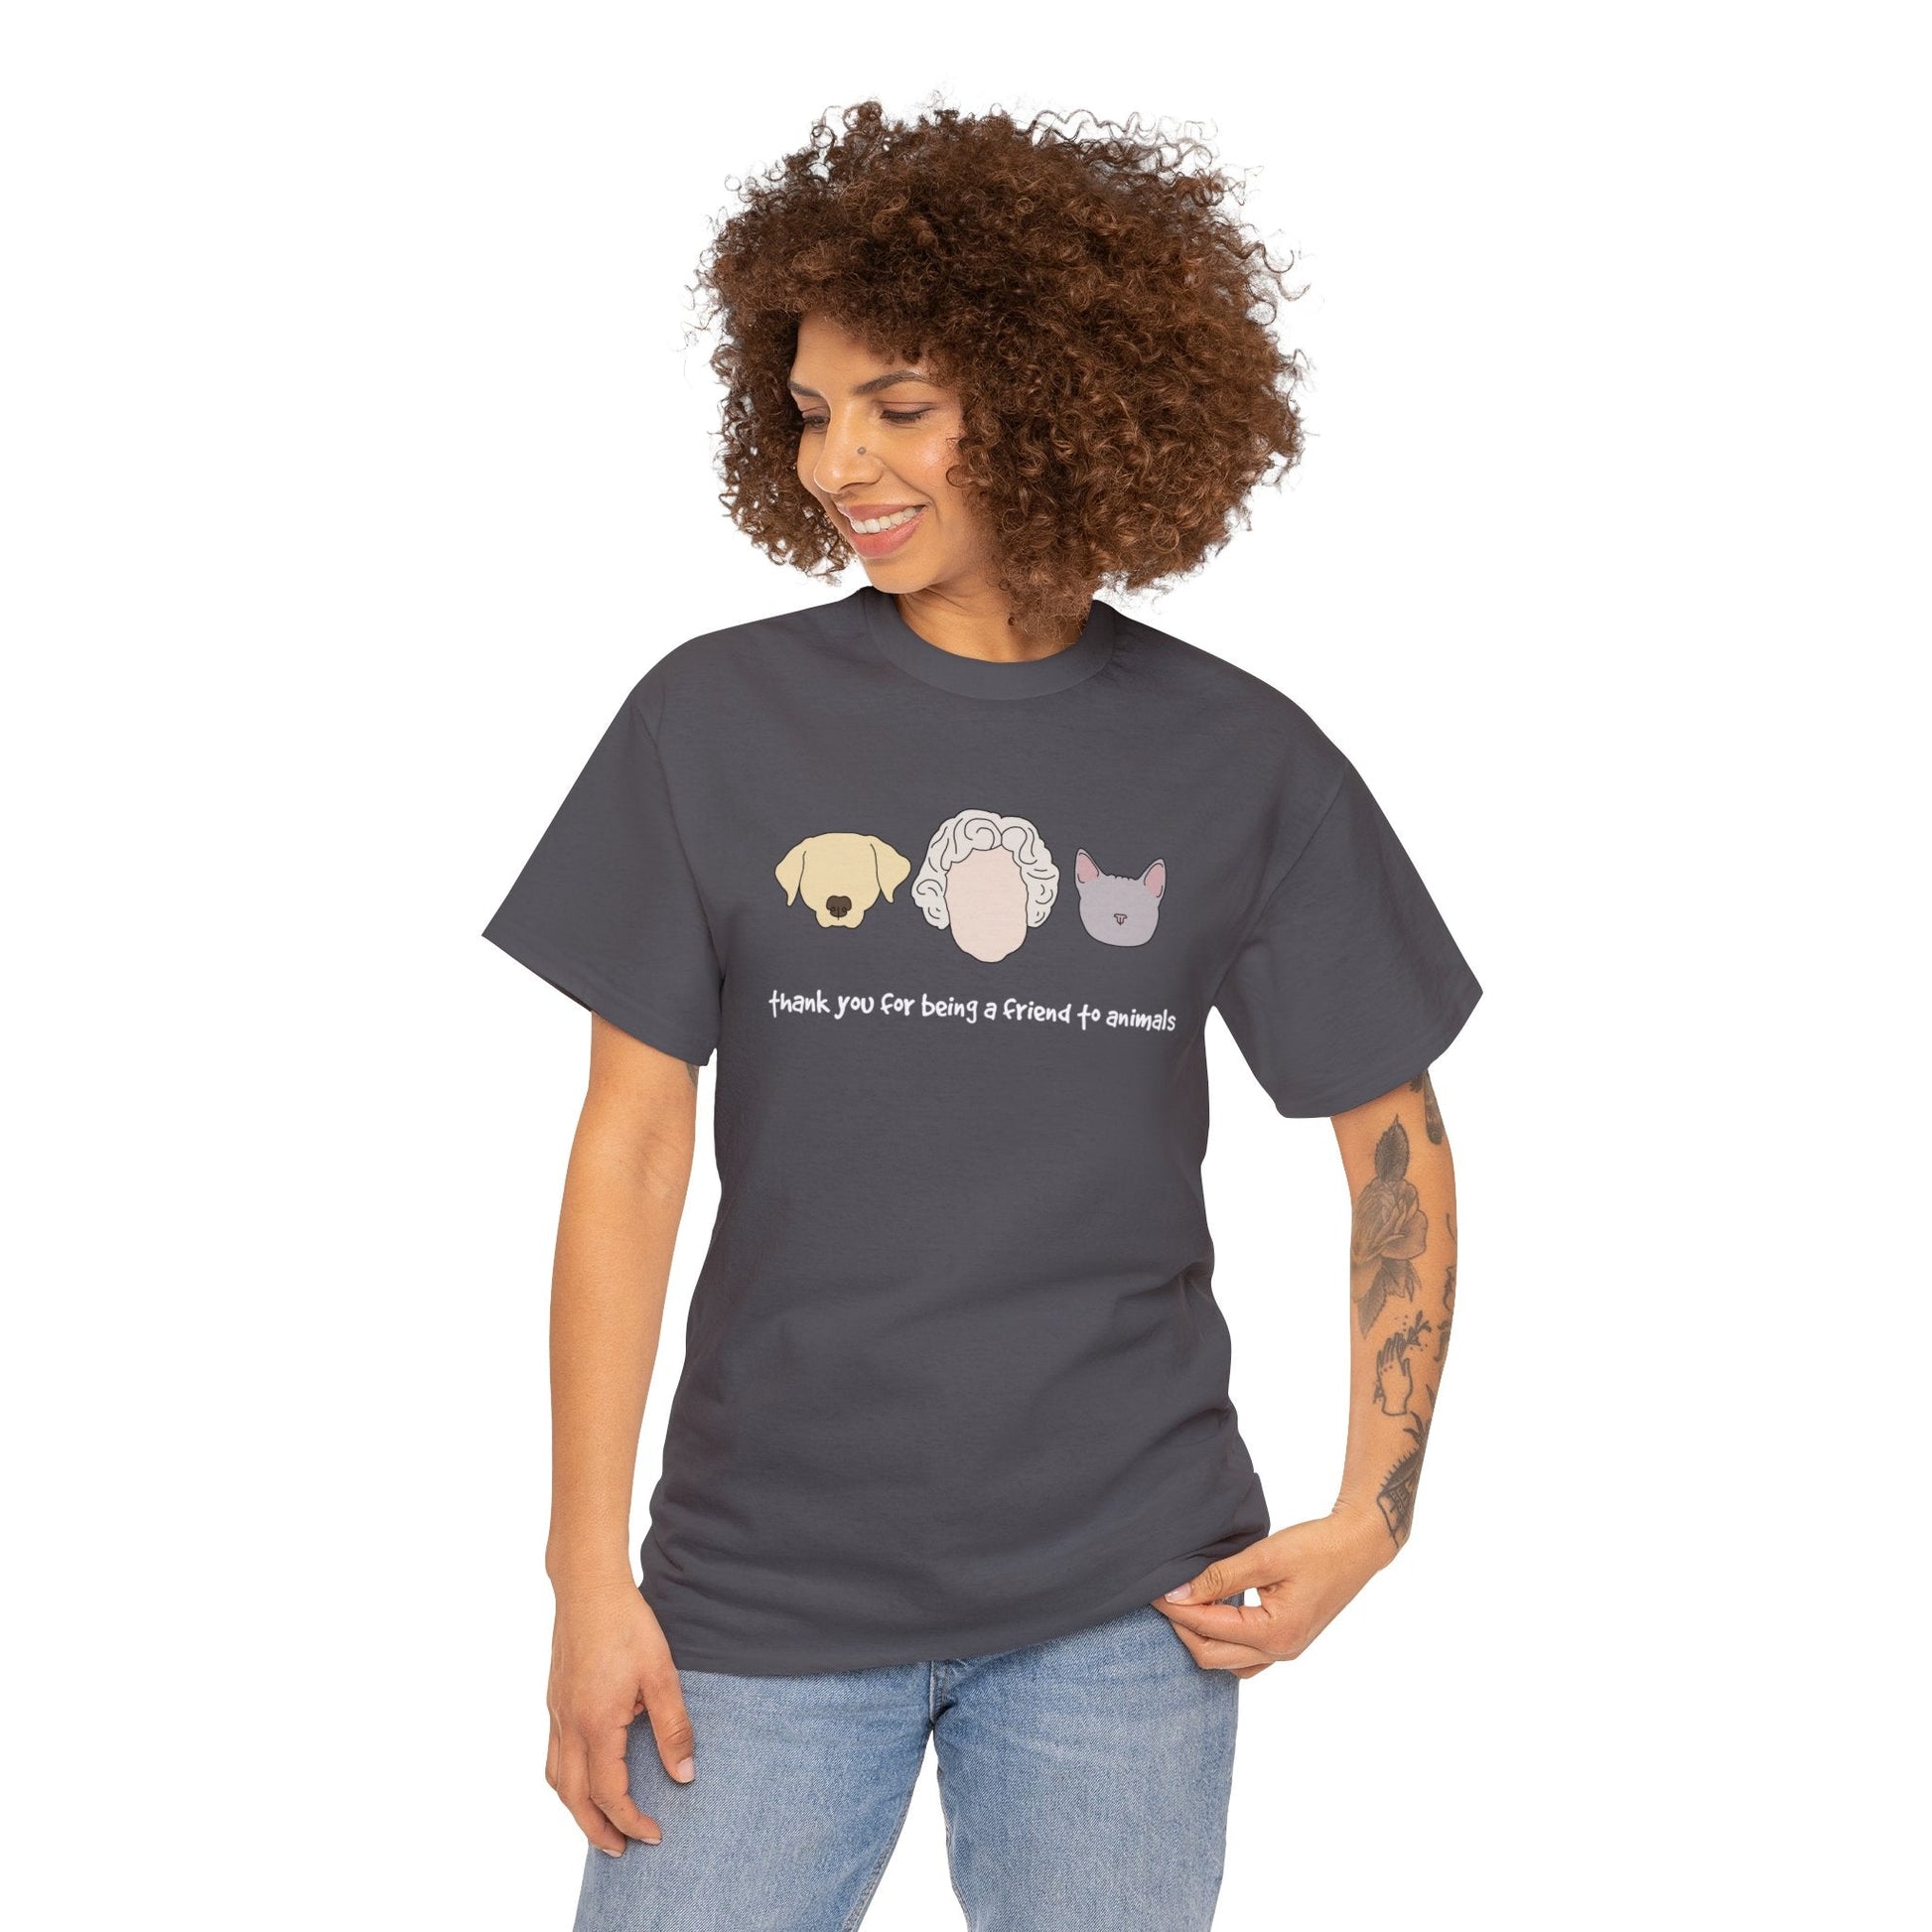 #BettyWhiteChallenge | FUNDRAISER for the Ezi's Fund | T-shirt - Detezi Designs-24999874098000869986